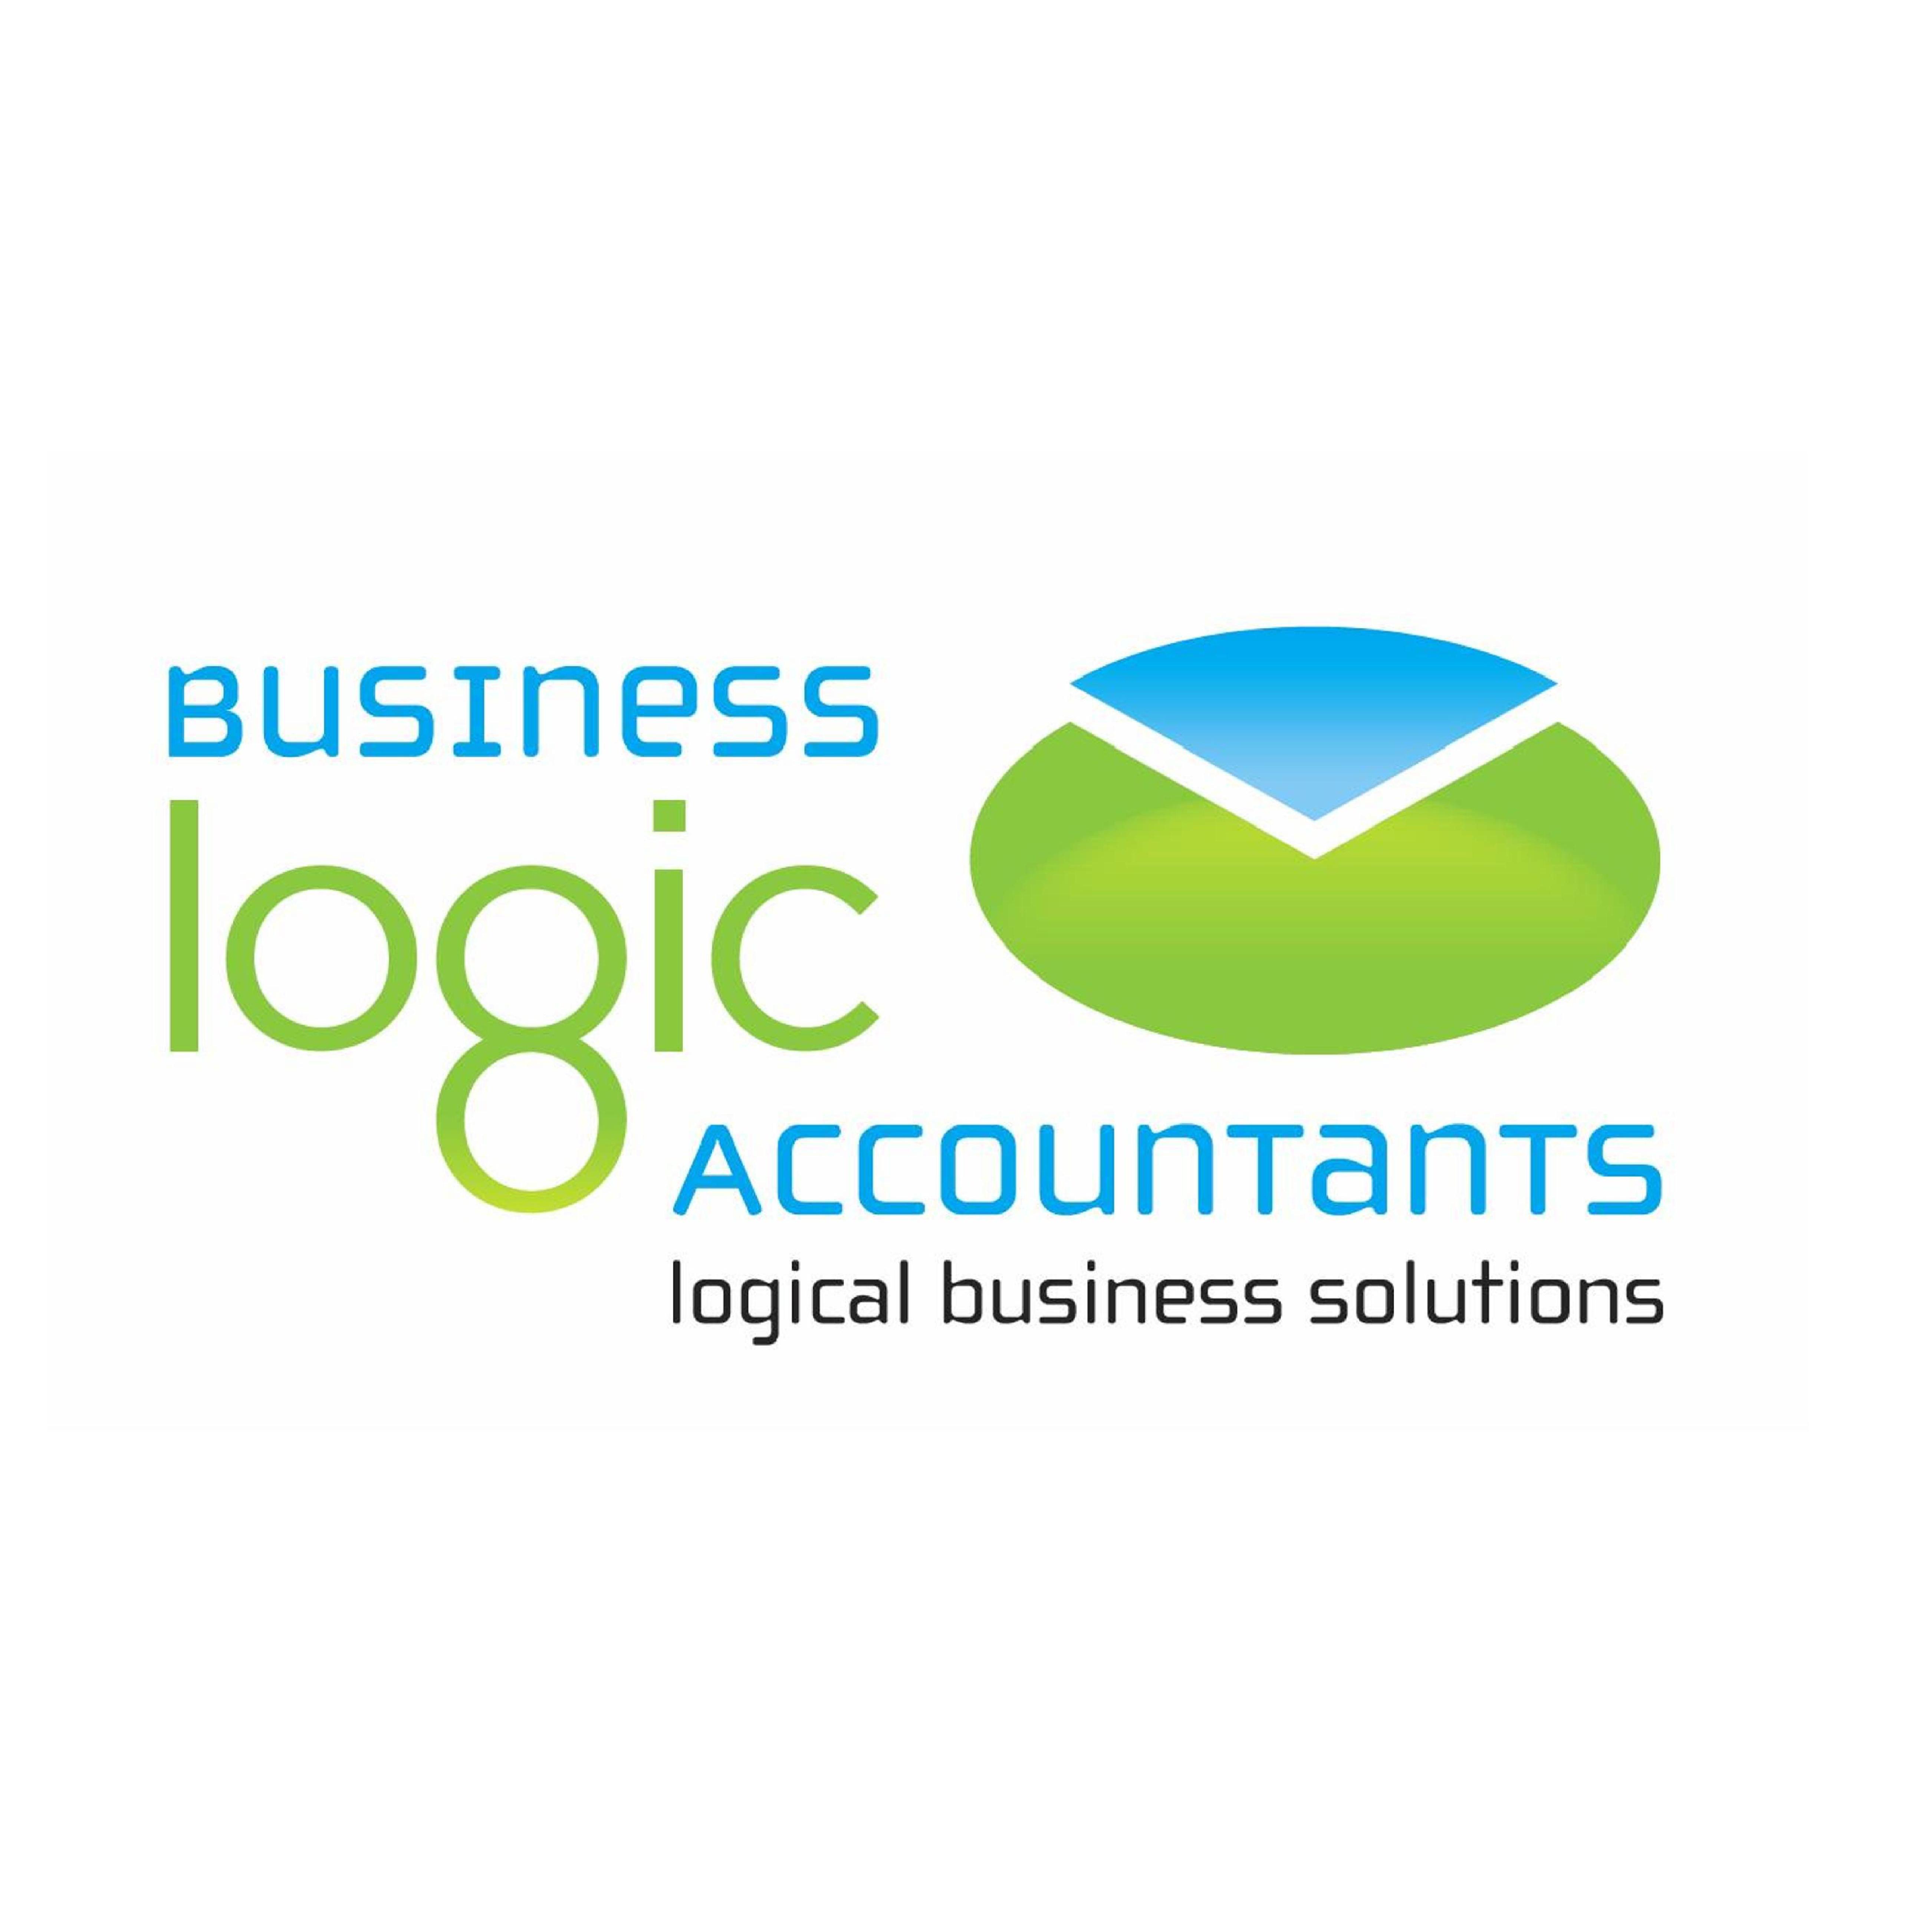 Business Logic Accountants Logo